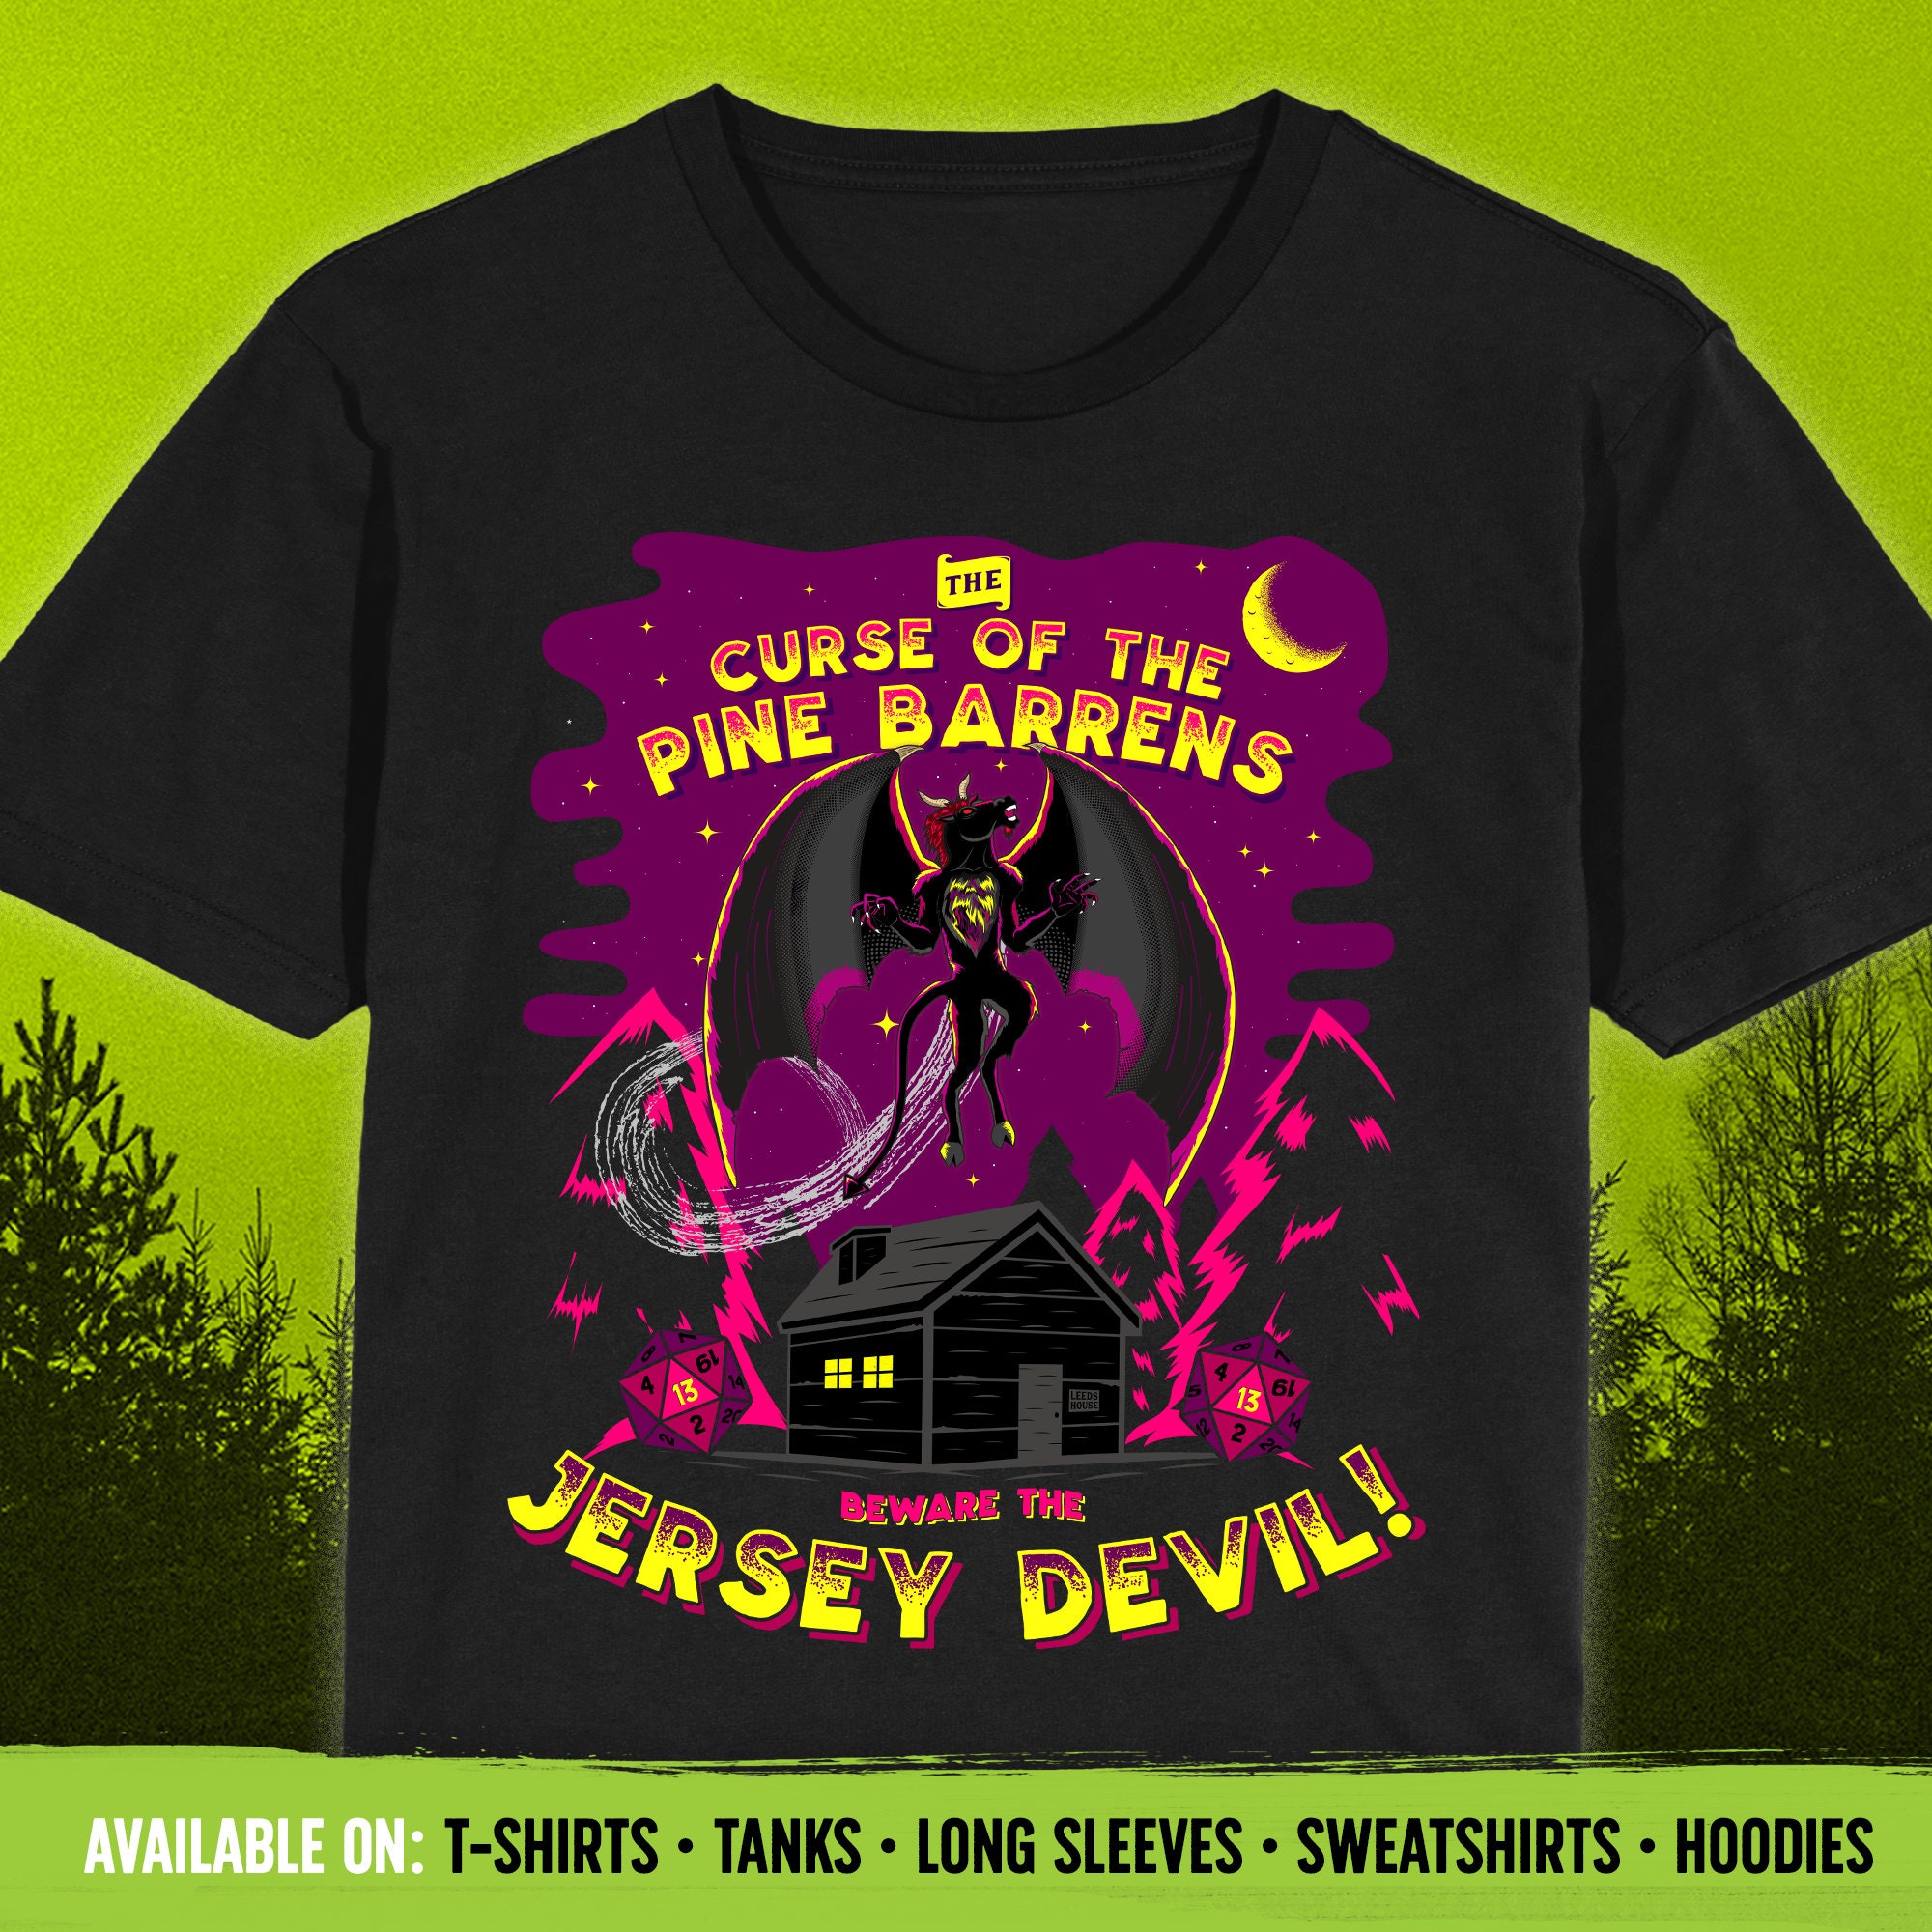 Jersey Devil Shirt  Cryptozoology Shirts